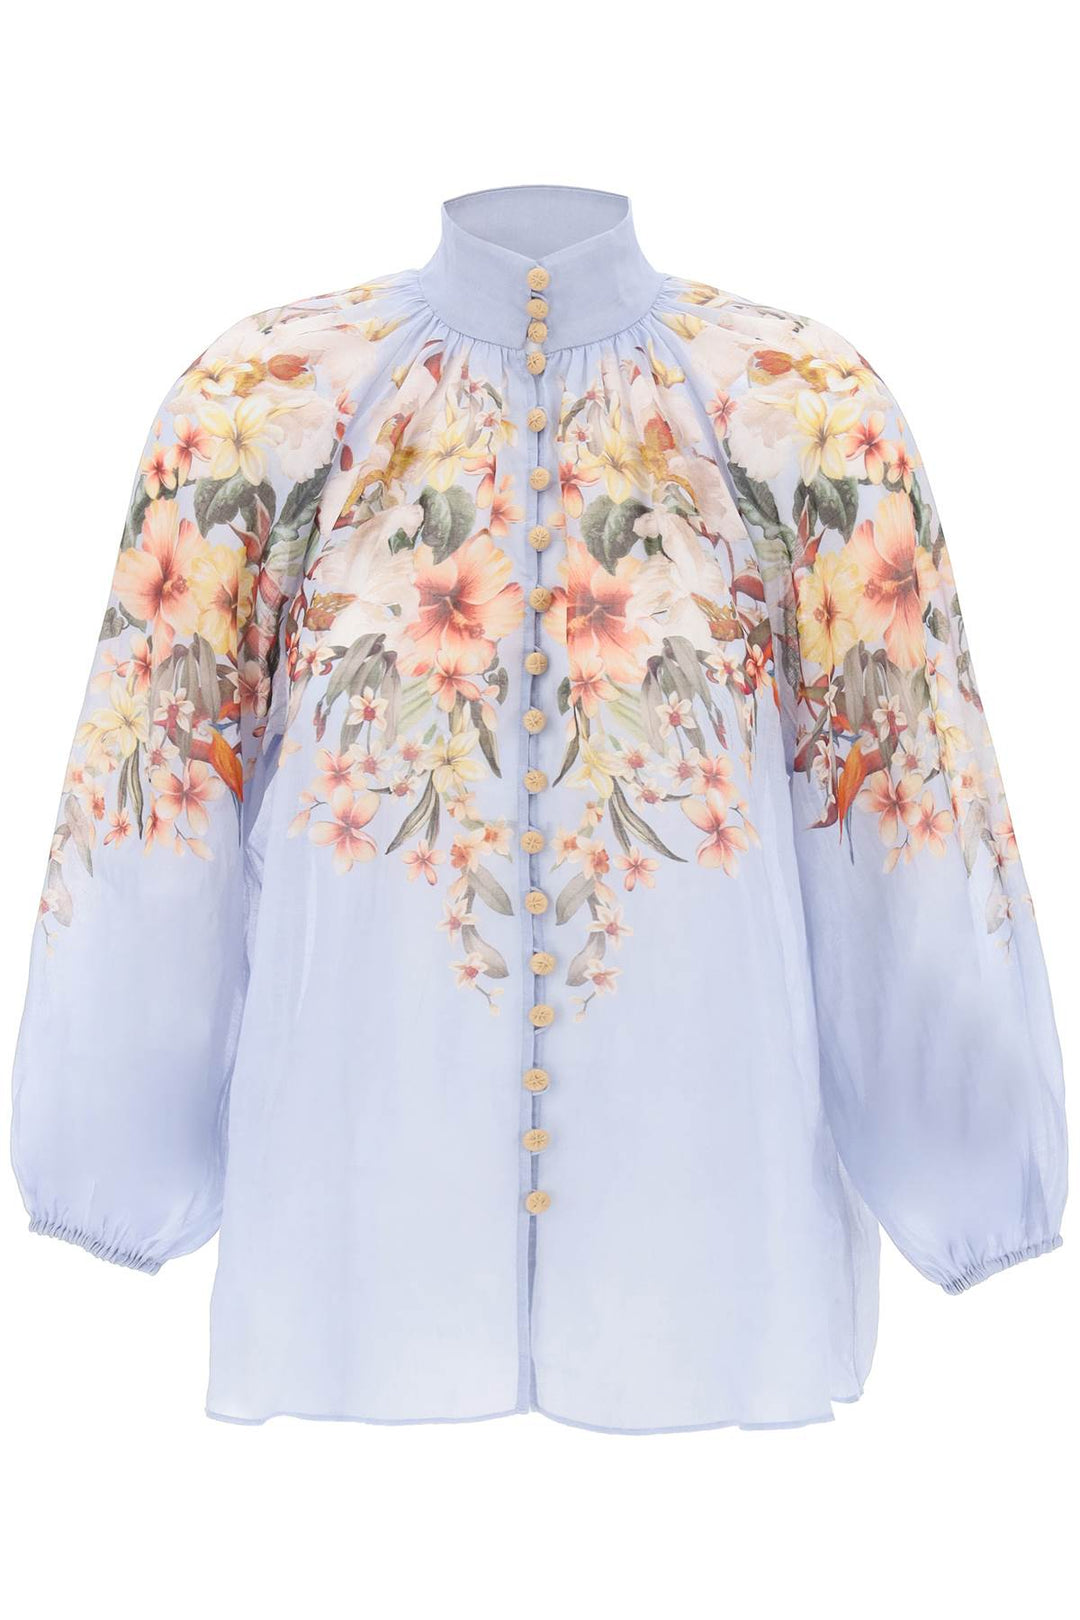 Zimmermann Lexi Billow Shirt With Floral Motif   Celeste